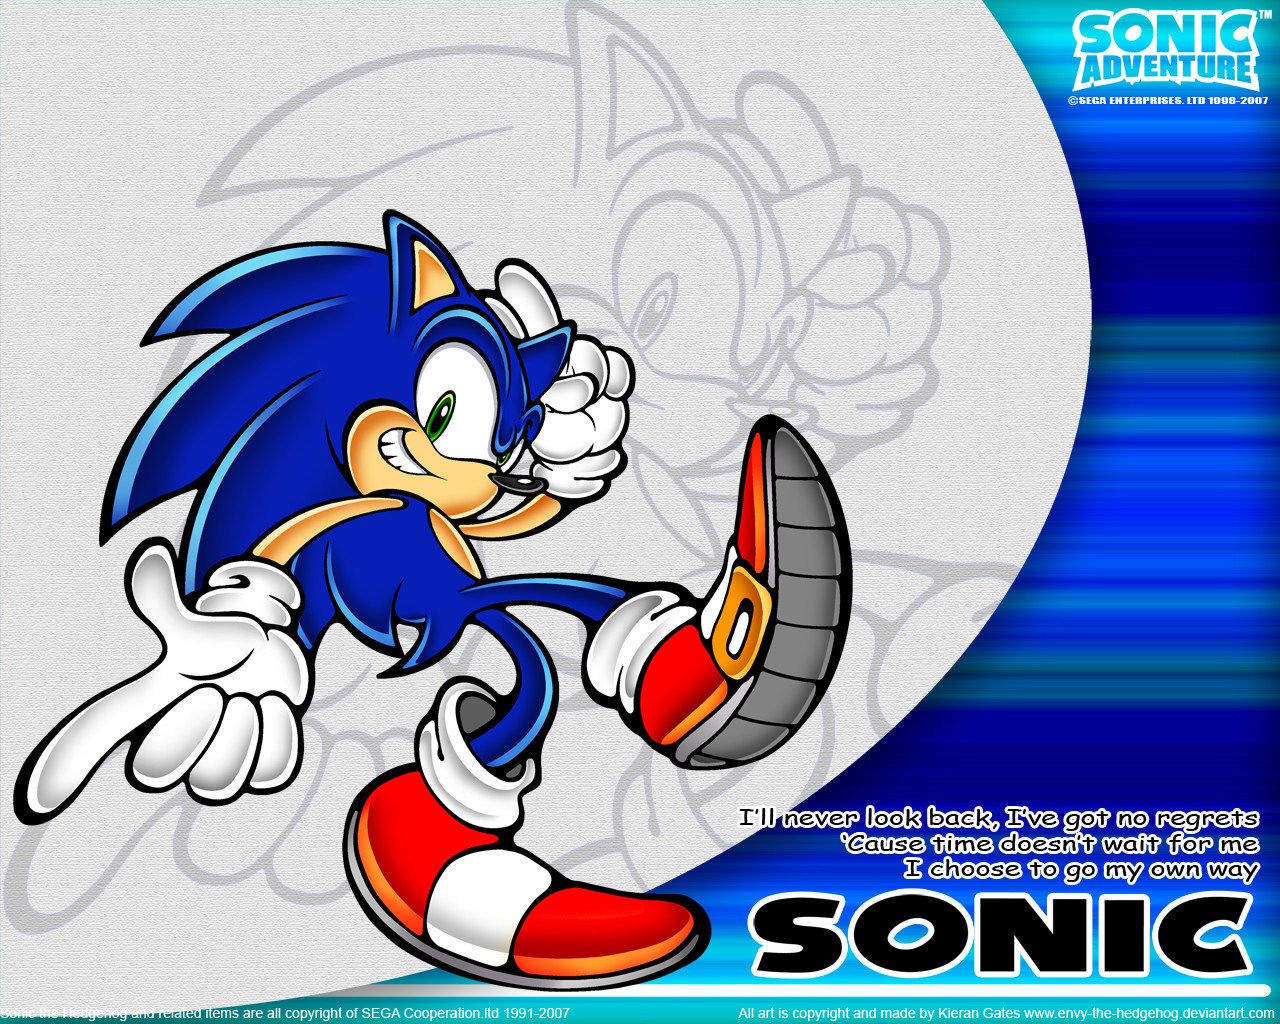 Sonic Adventure wallpapers HD for desktop backgrounds